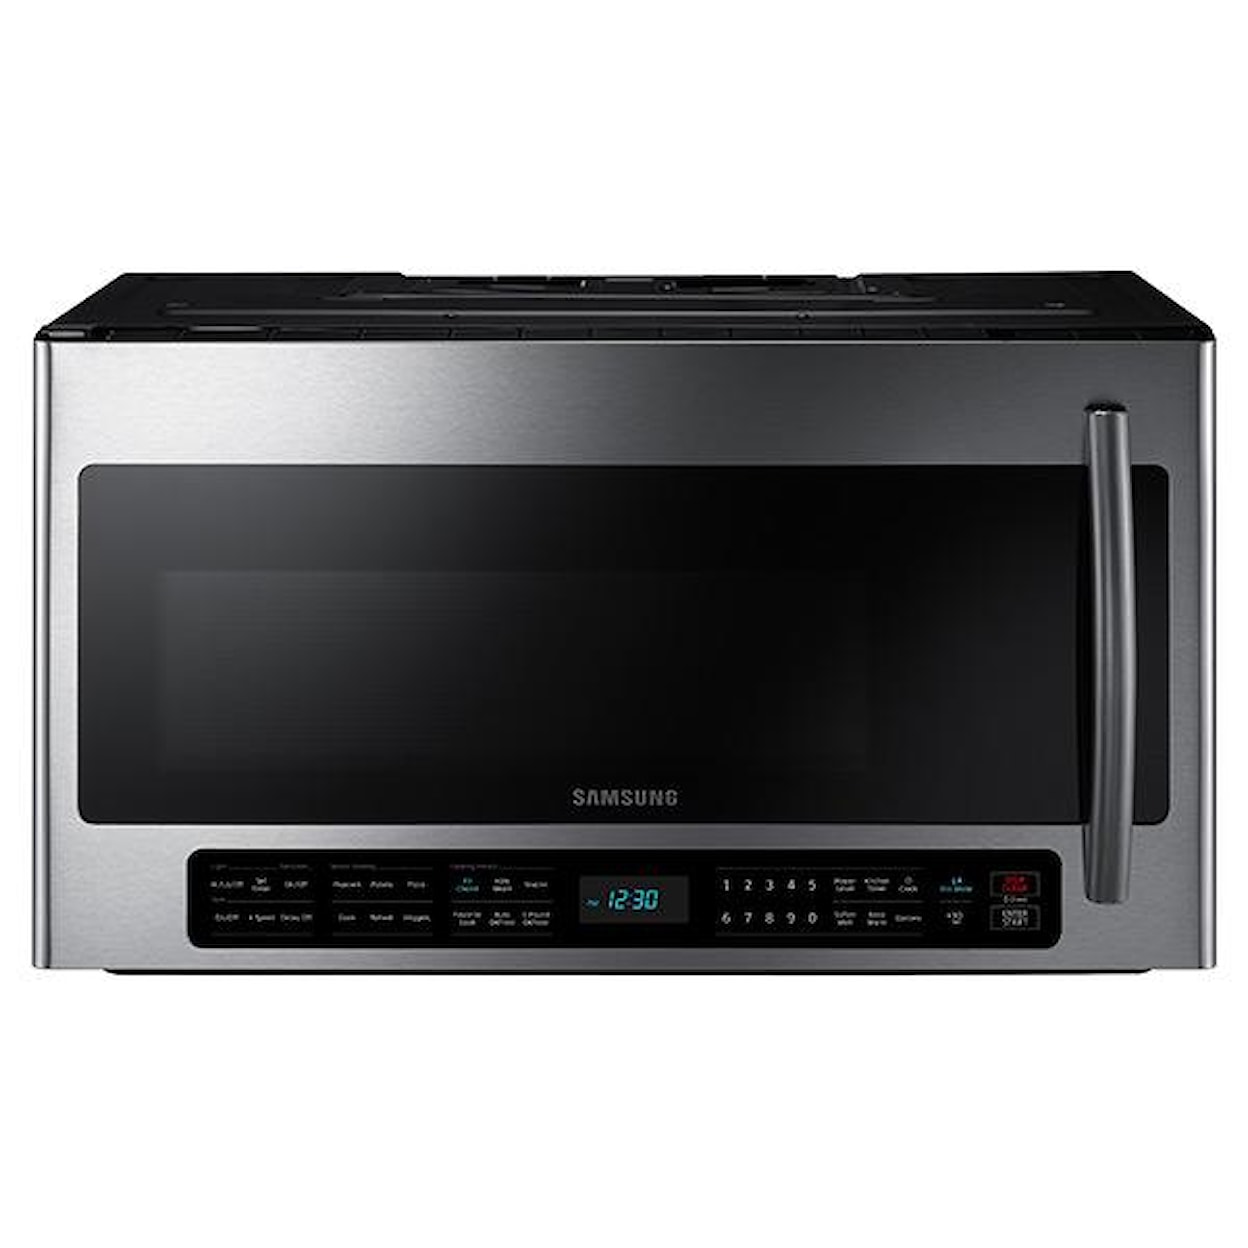 Samsung Appliances Microwaves 2.0 cu.ft. Over The Range Microwave